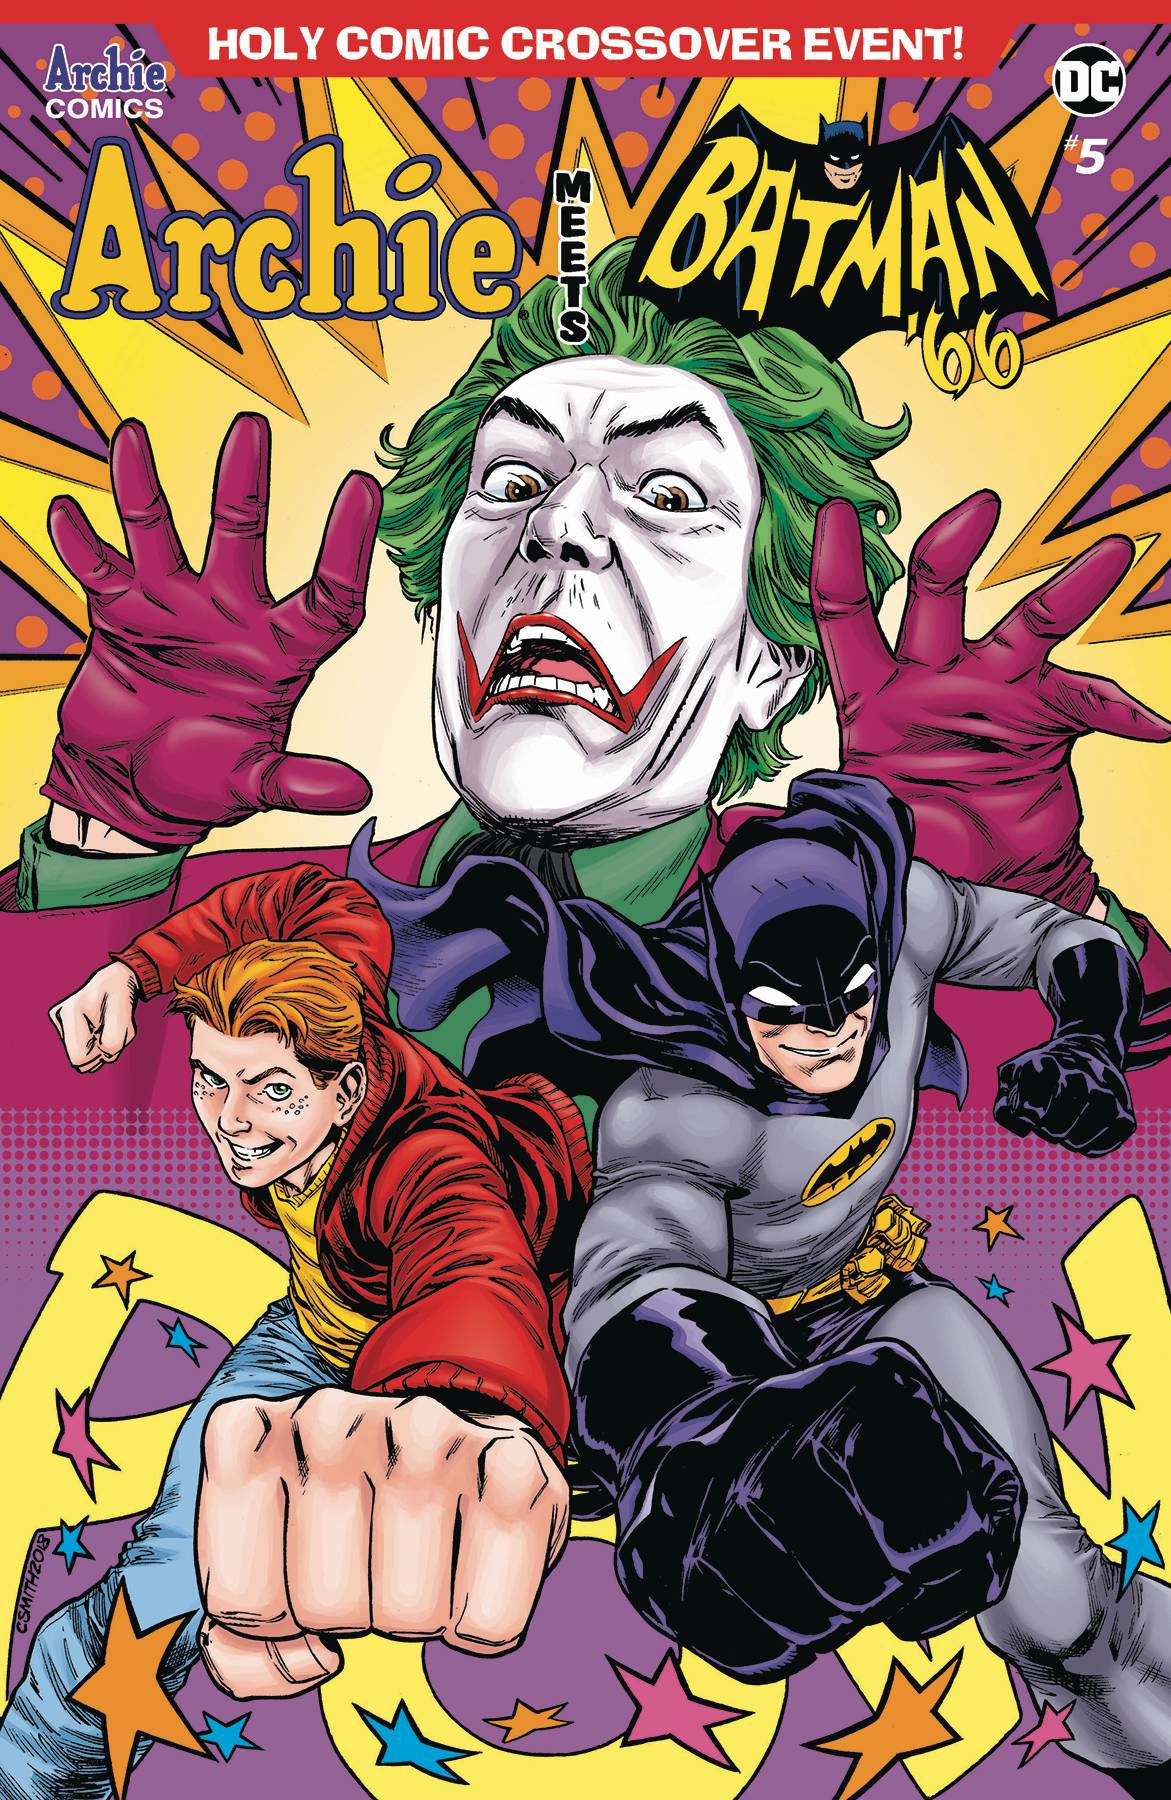 Archie Meets Batman 66 #5 Cover F Smith